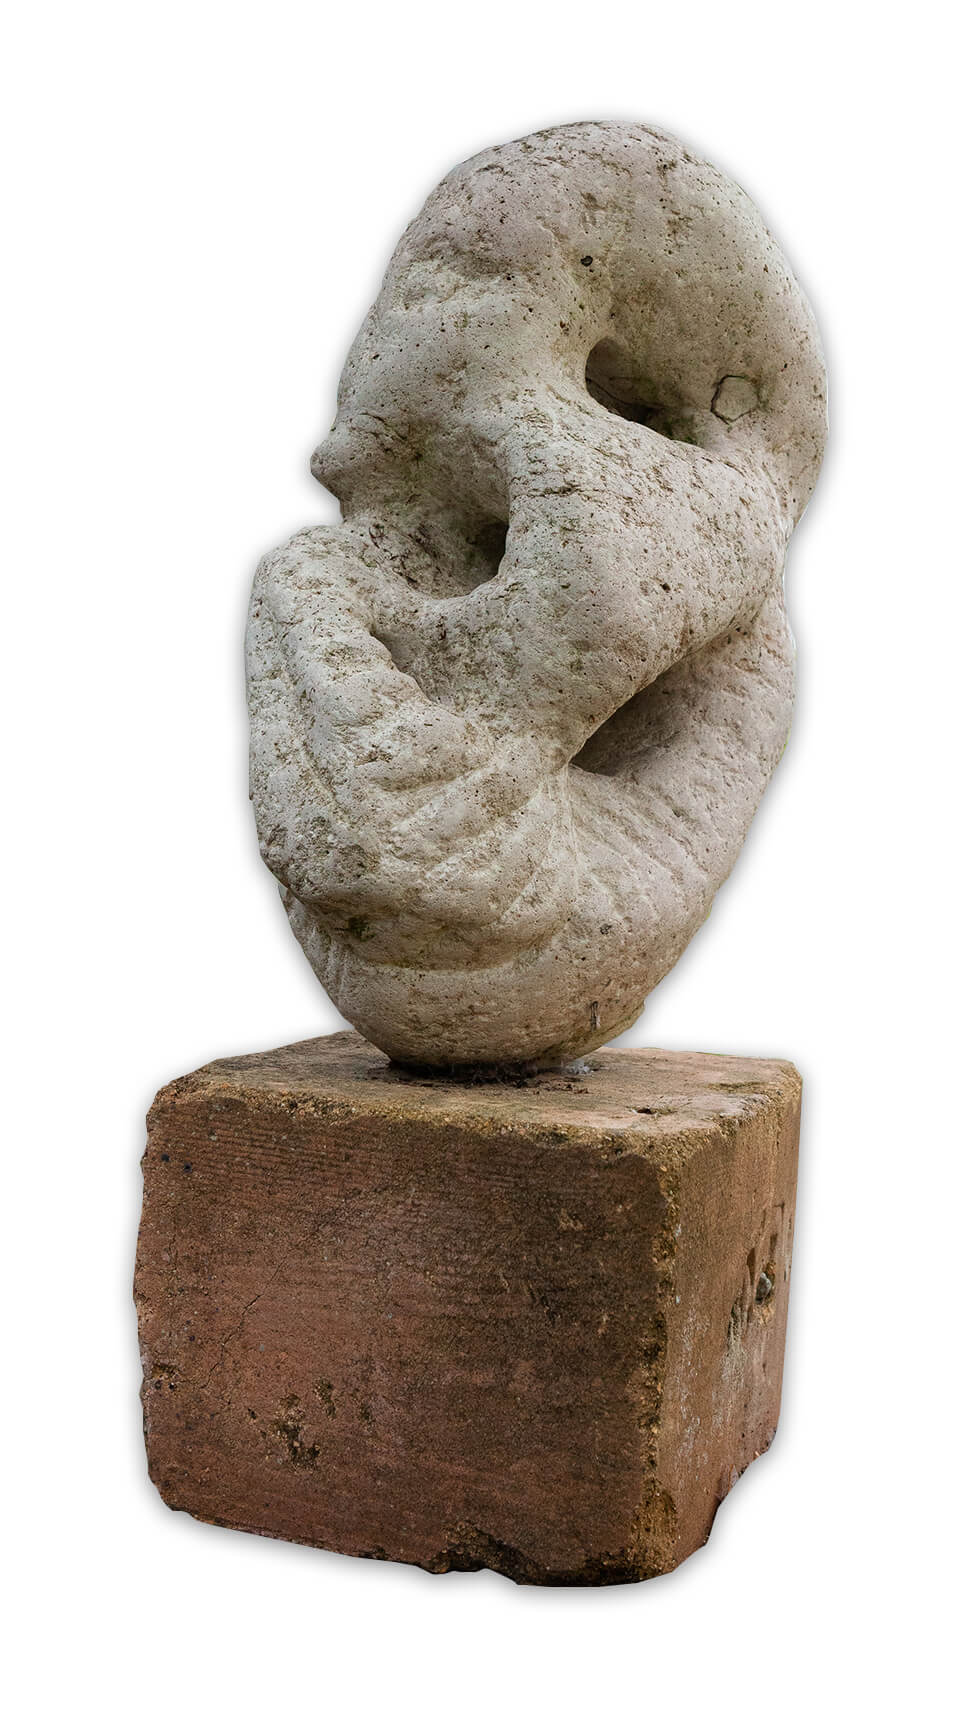 Slangenmens - stone - 1992 - 0.68m x 0.30m